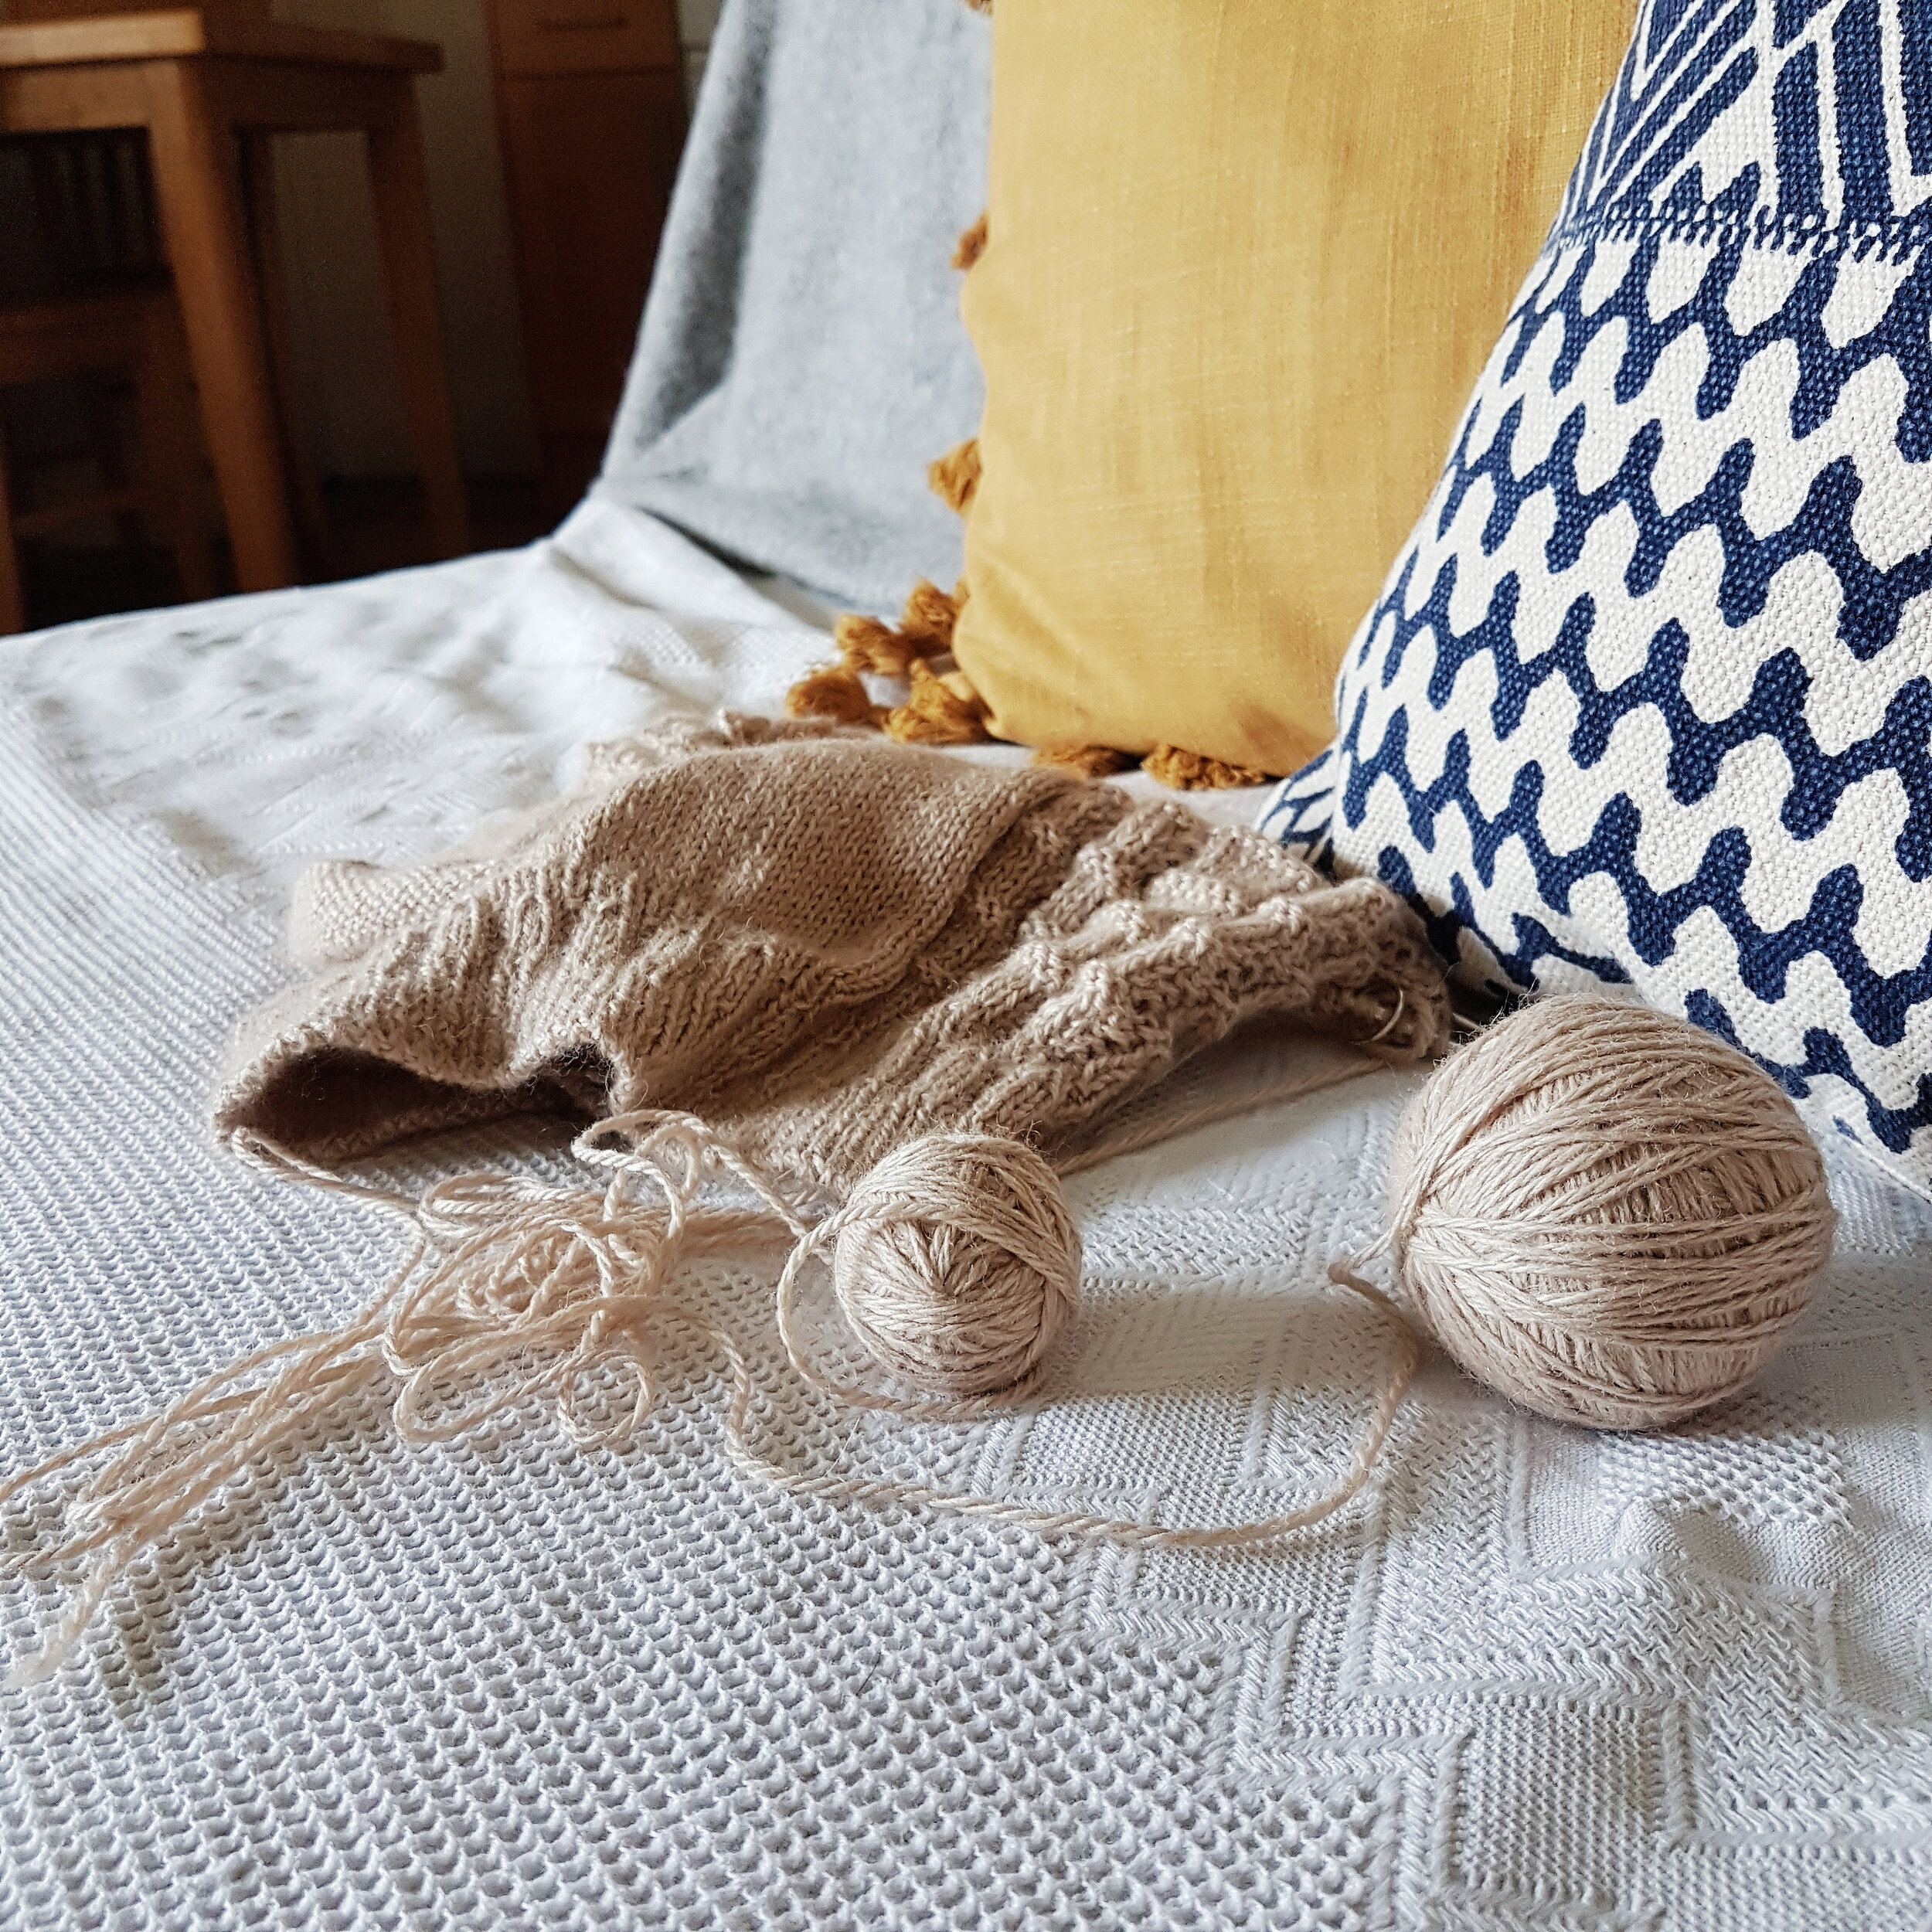 Knitting Pattern Plagiarism: How do I make my pattern original